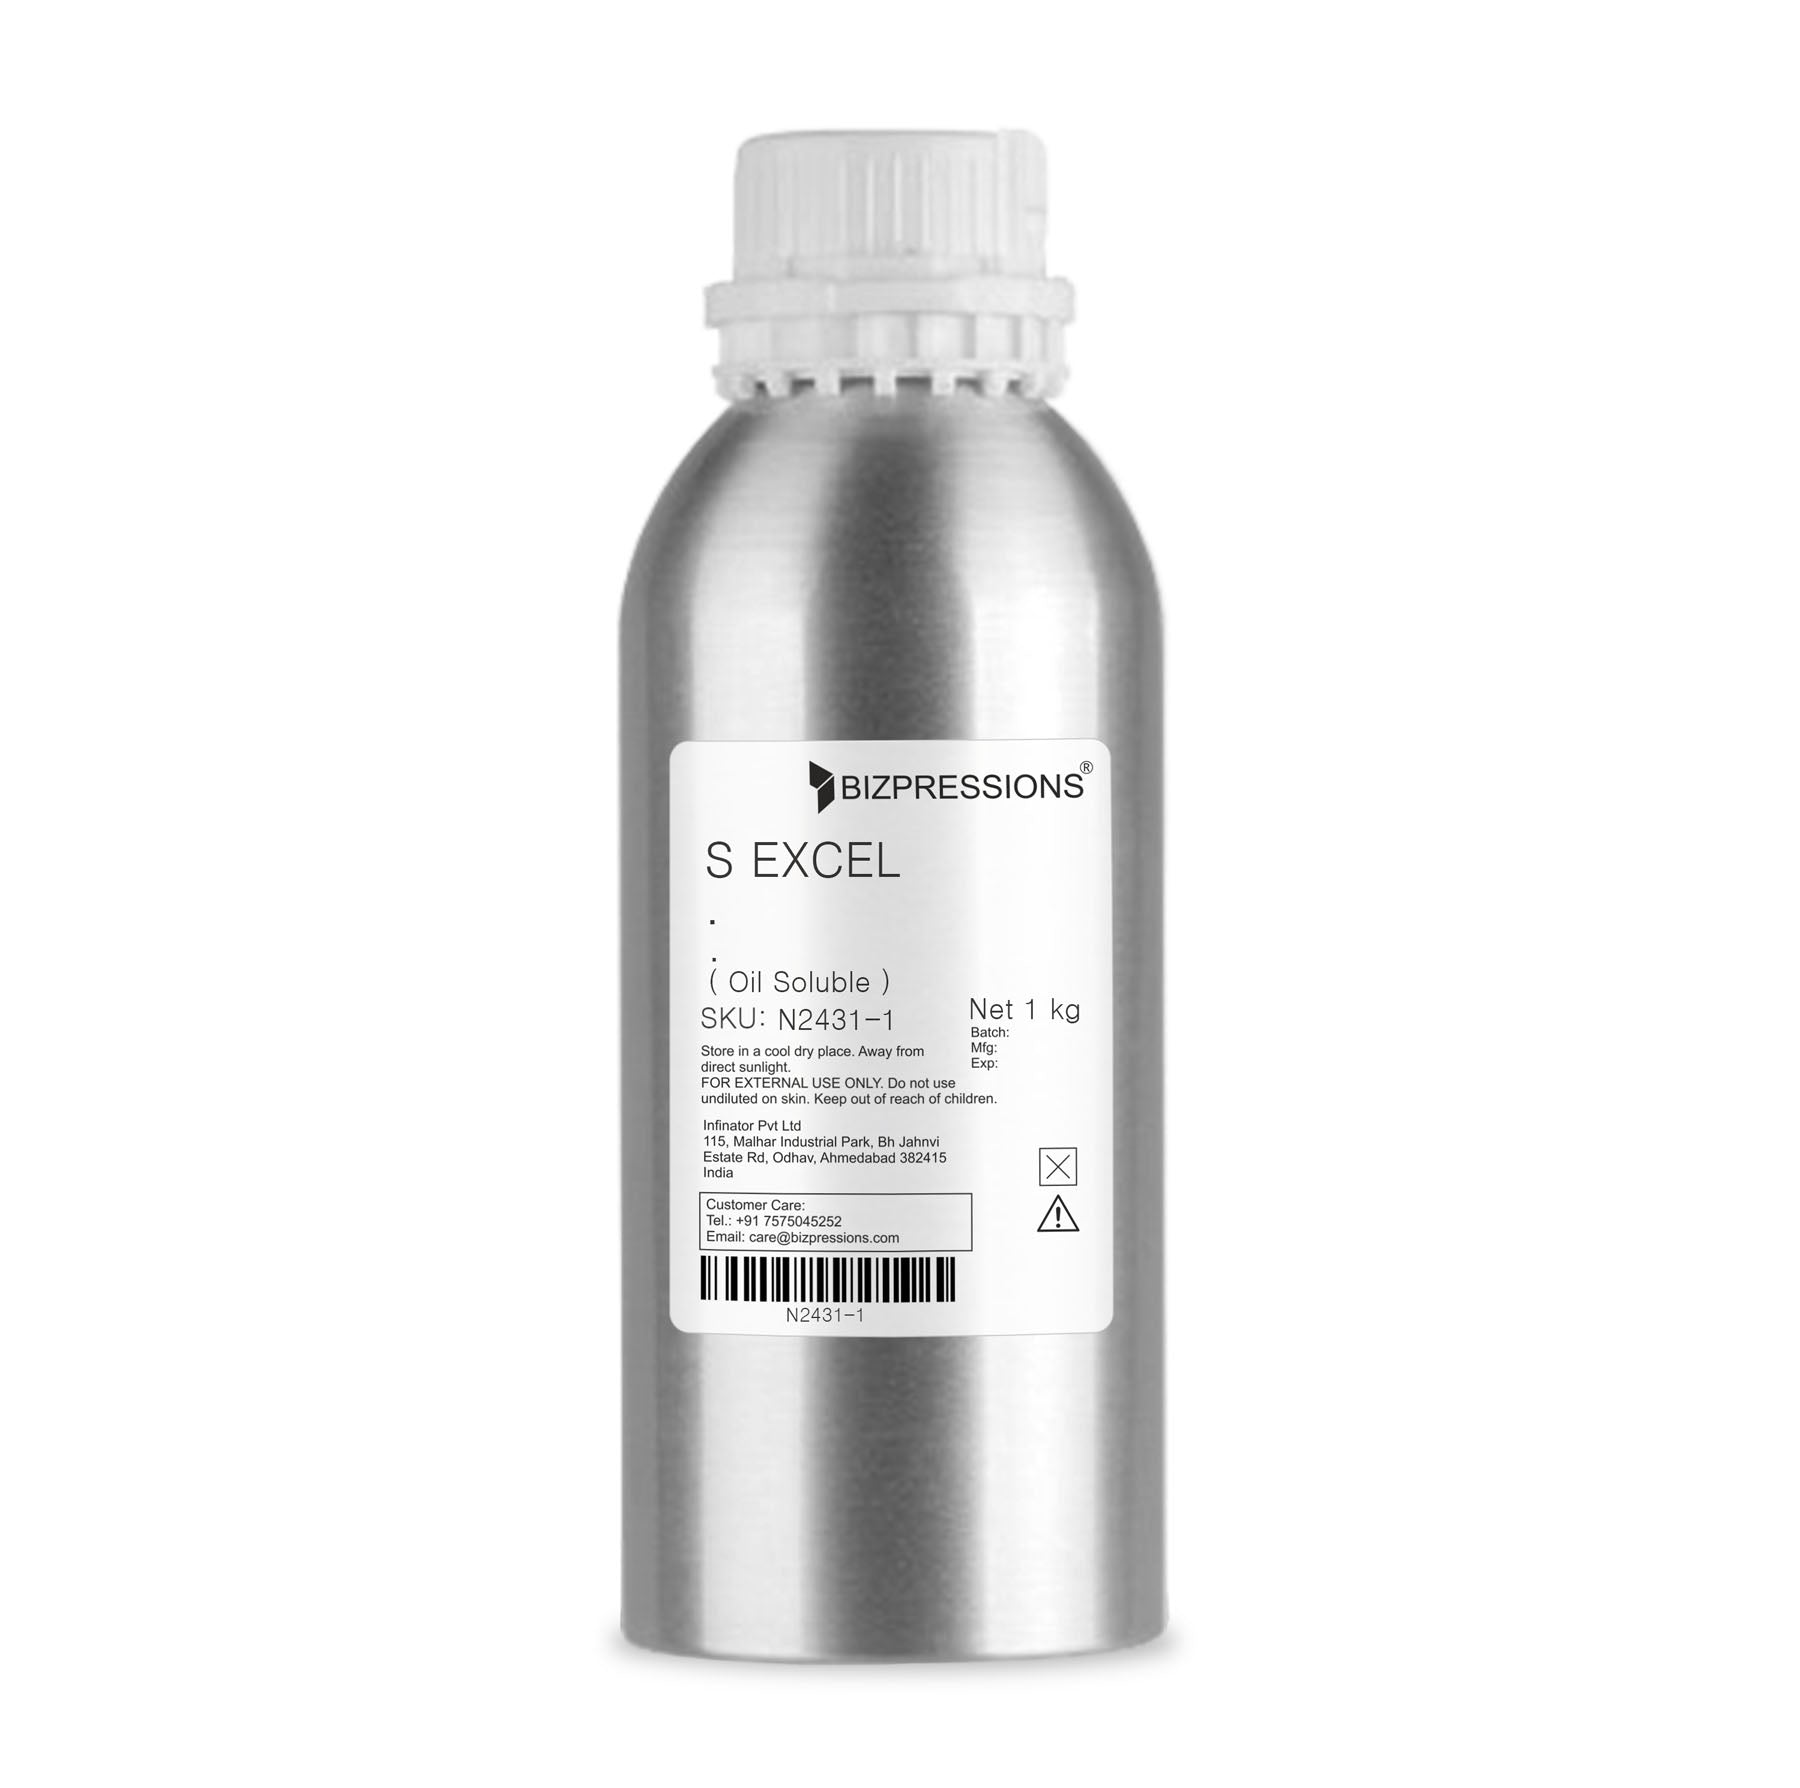 S EXCEL - Fragrance ( Oil Soluble ) - 1 kg